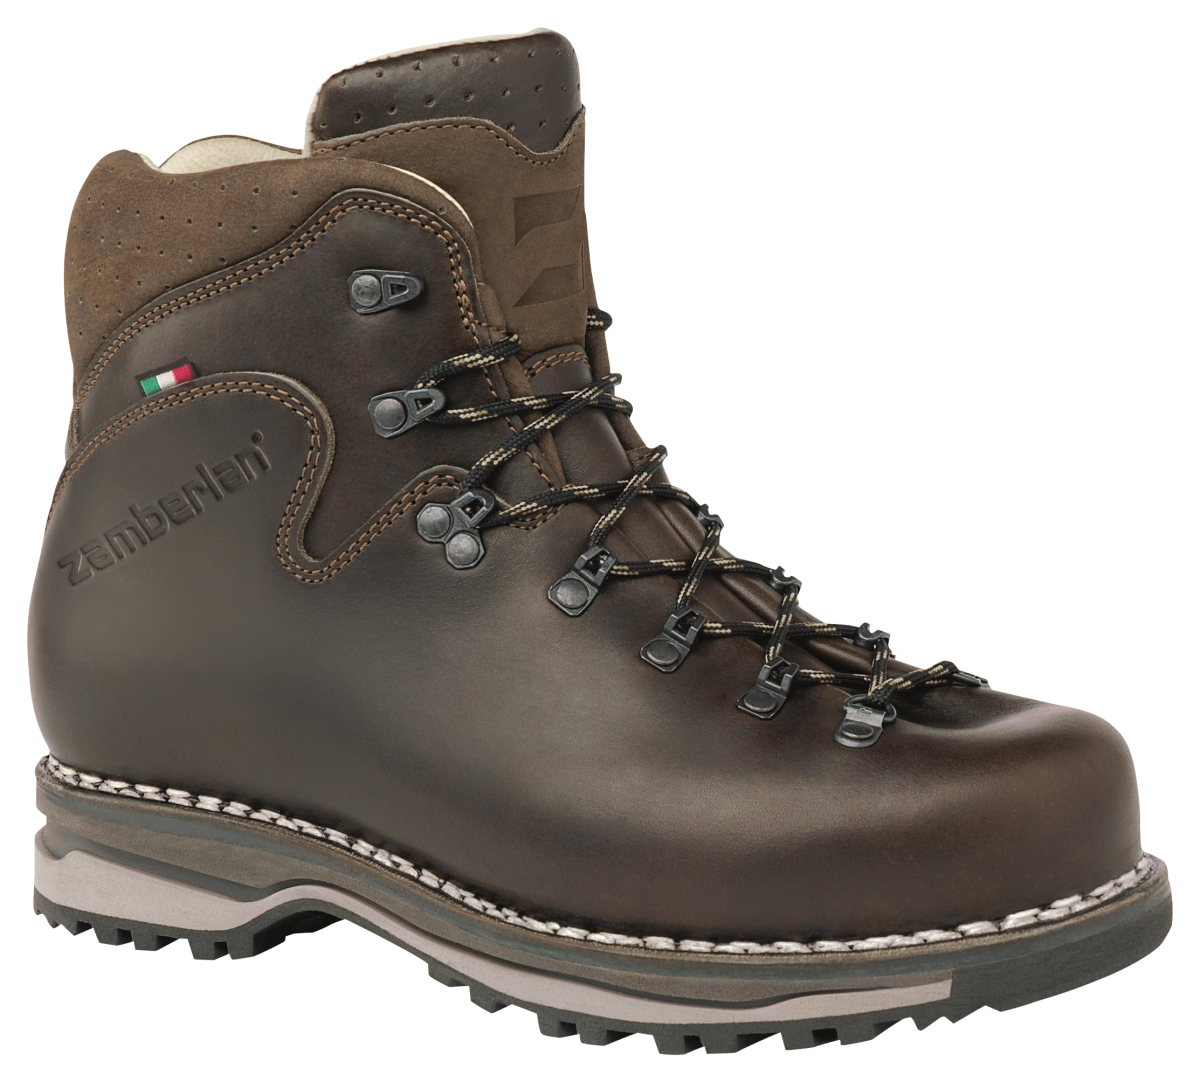 Zamberlan Latemar NW Hiking Boots for Men - Waxed Dark Brown - 10.5M